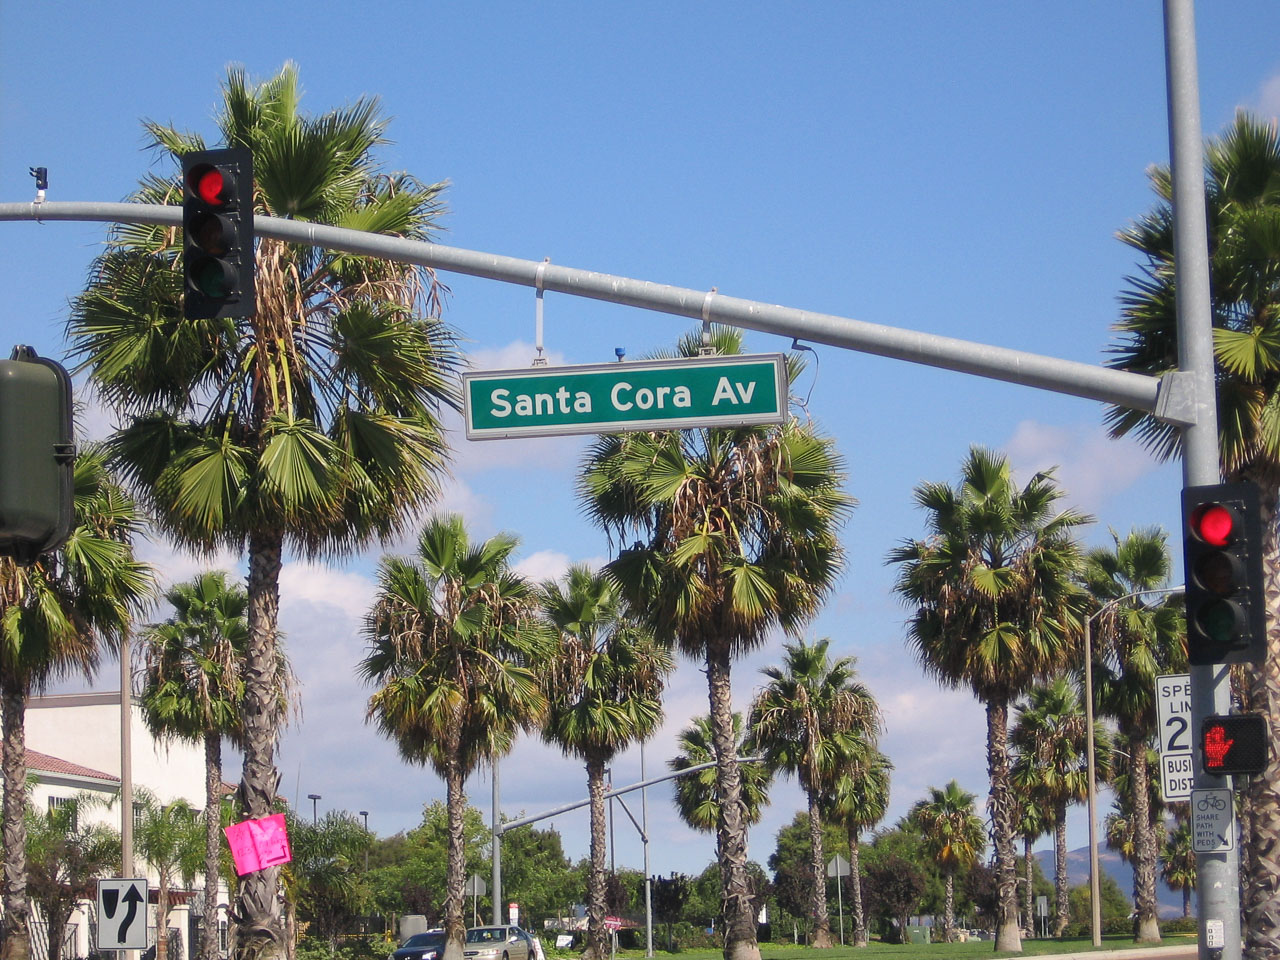 Santa Cora Ave